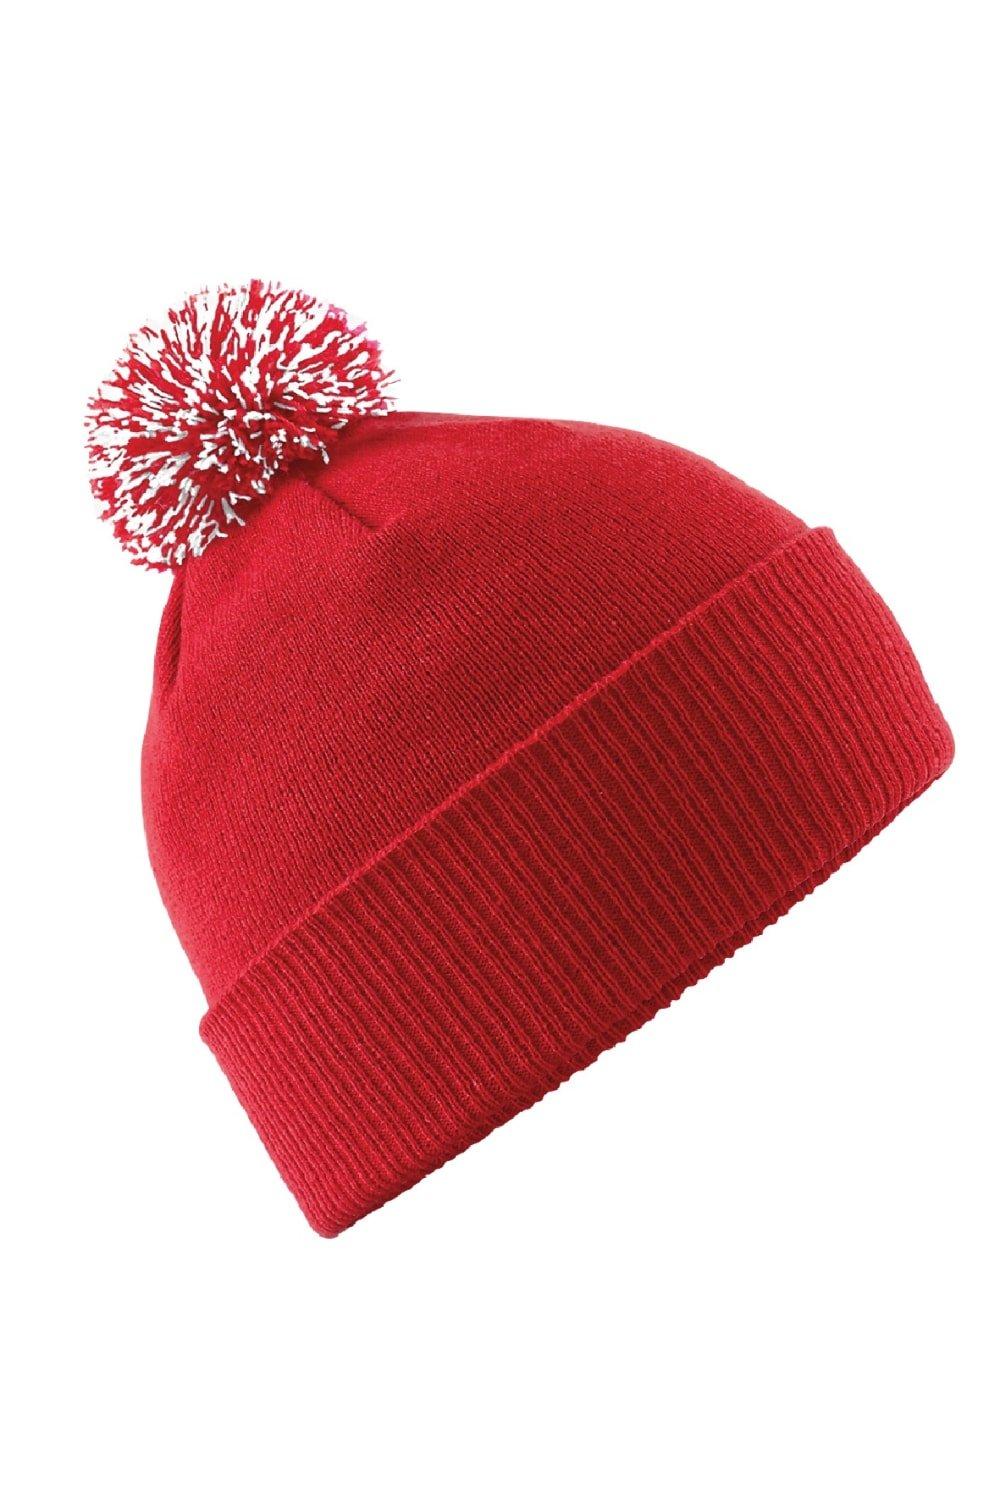 Шапка «Снежная звезда» Beechfield, красный траулерная шапка beechfield красный